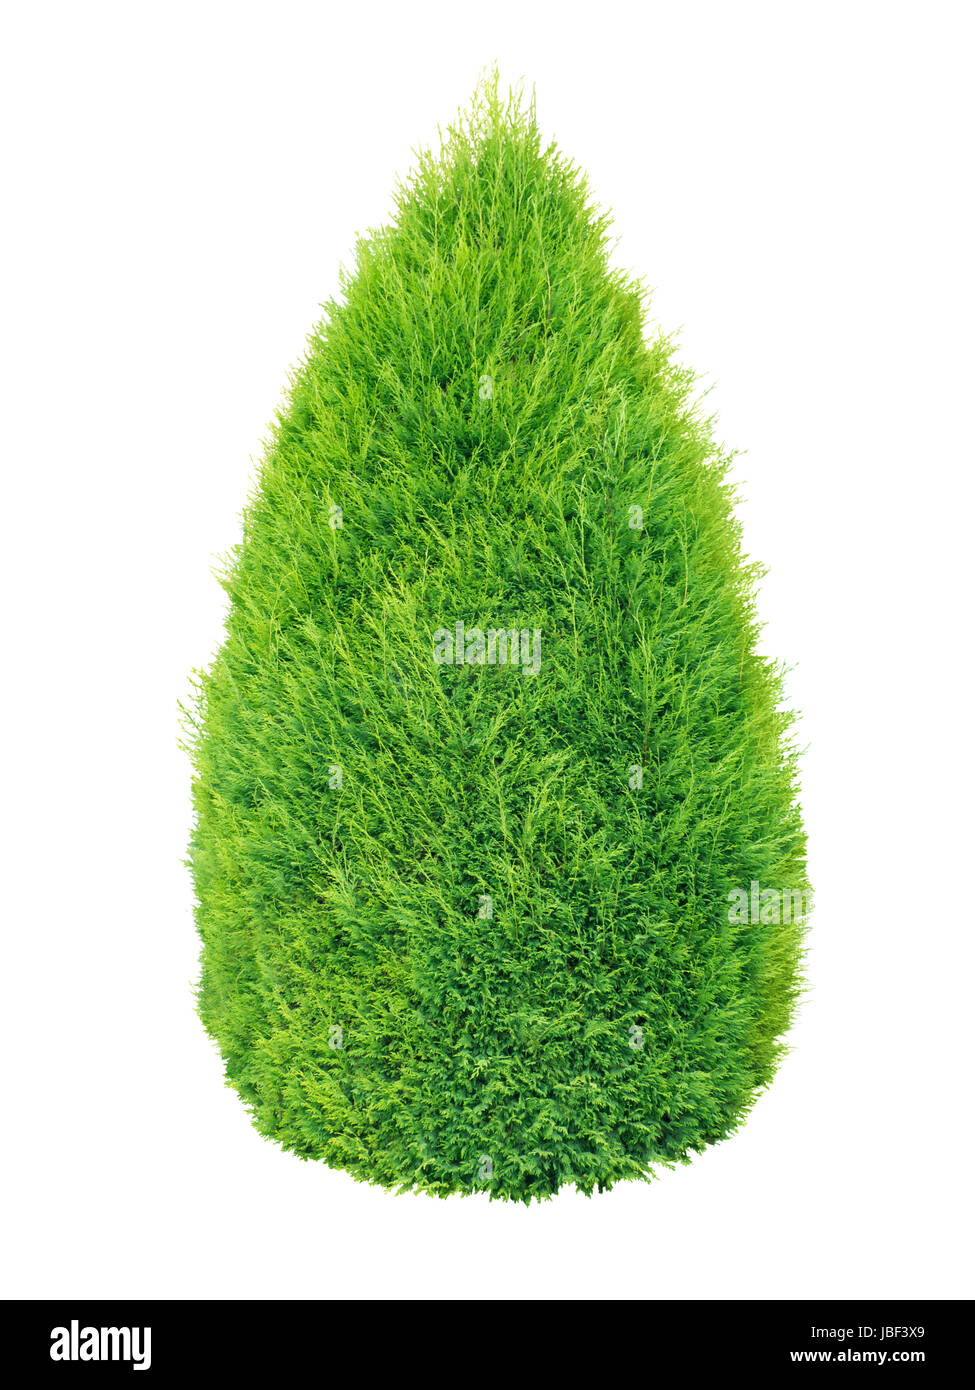 Lush green thuja conic shrub isolated on white Stock Photo